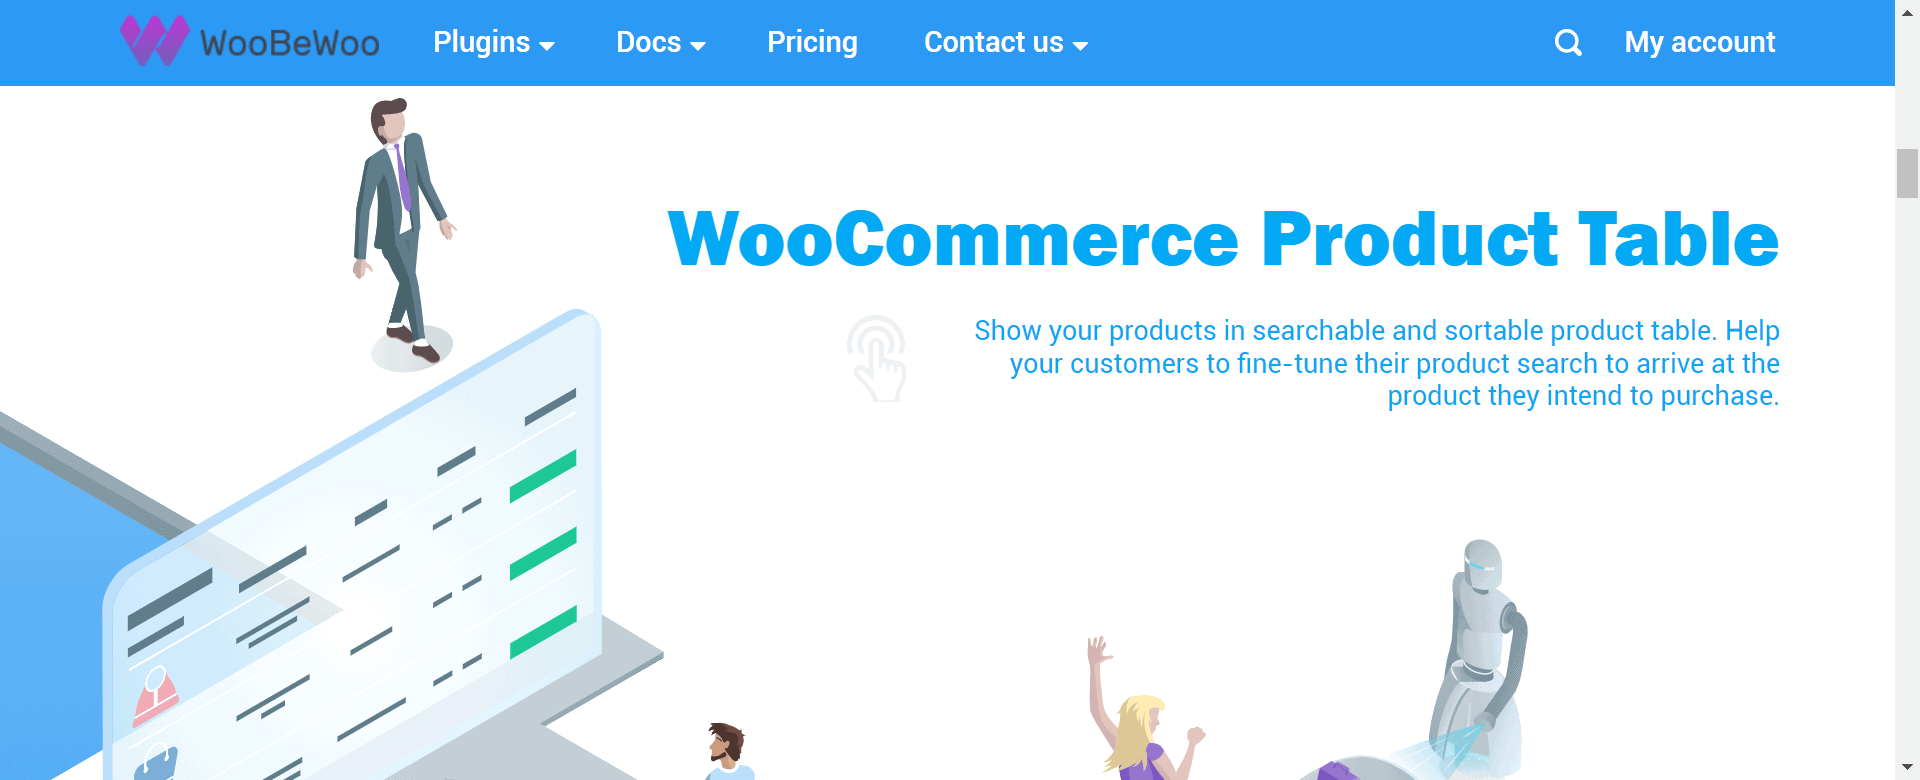 WooBeWoo-The-Best-WooCommerce-WordPress-Plugins